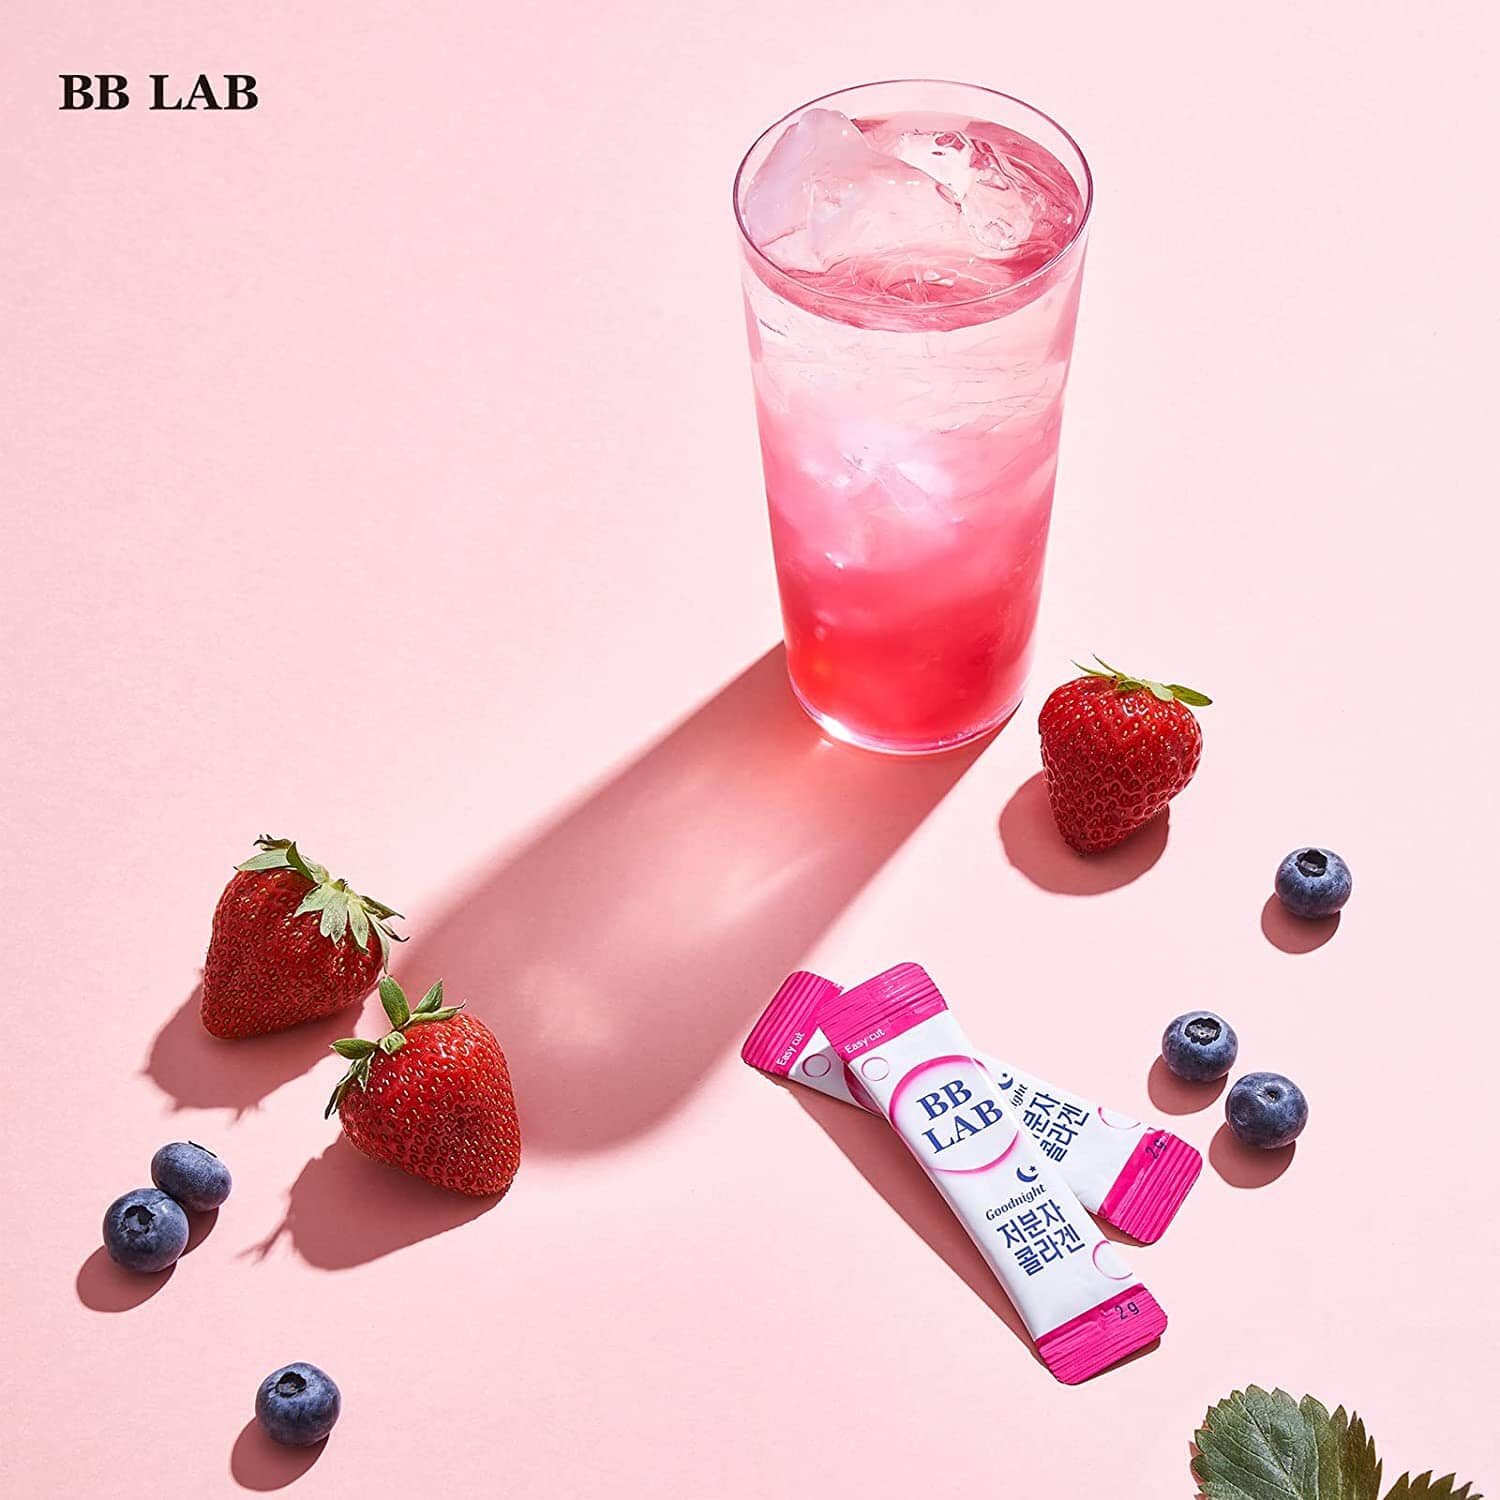 BB Lab Good Night Collagen (2g*30) x 2 Duo Pack Vitamins &amp; Supplements BB LAB ORION XO Sri Lanka